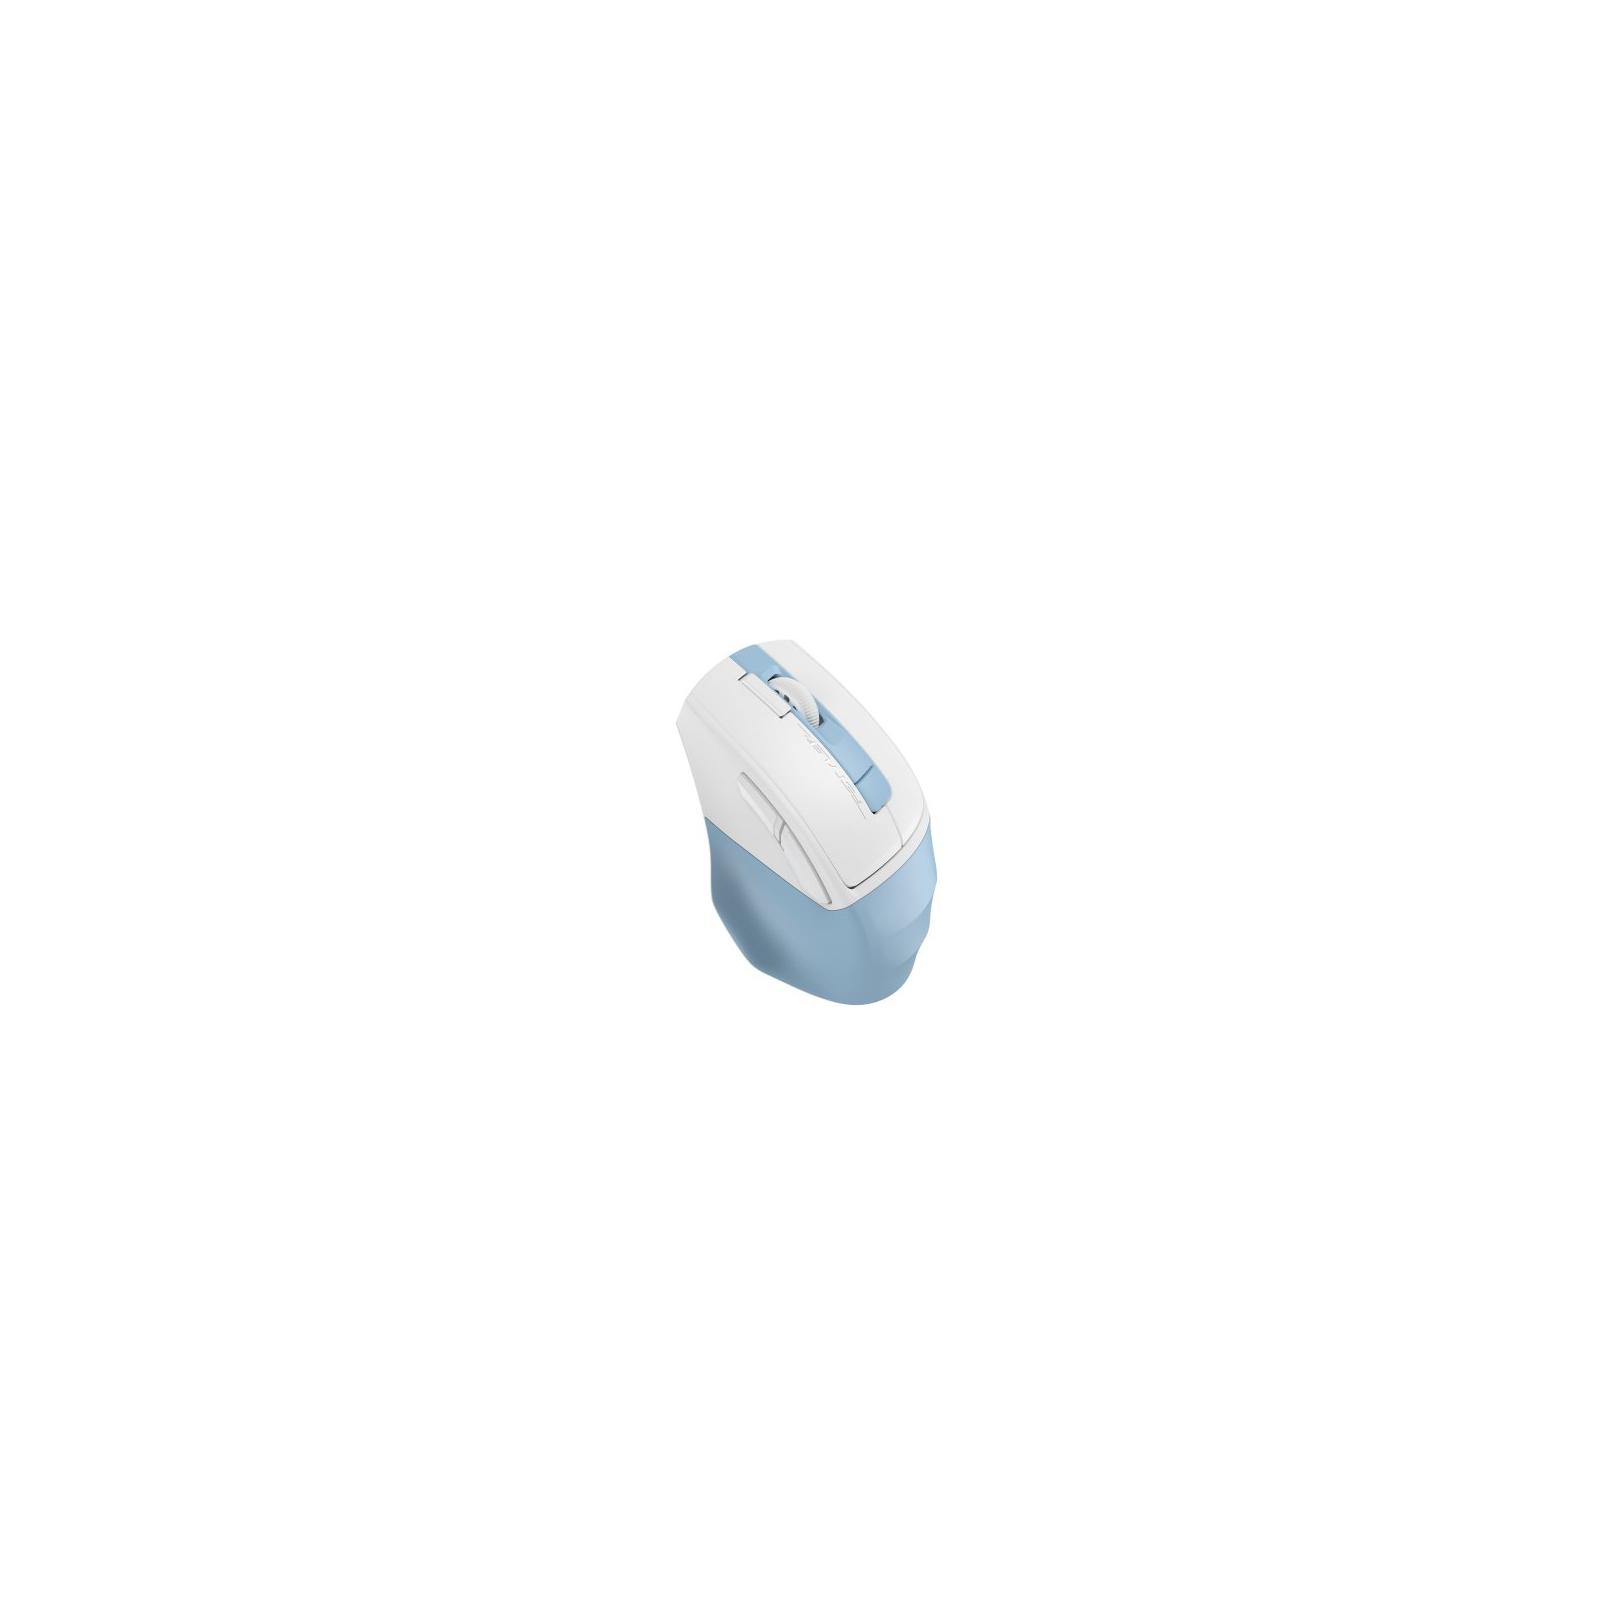 Мышка A4Tech FG45CS Air Wireless lcy Blue (4711421993210) изображение 6